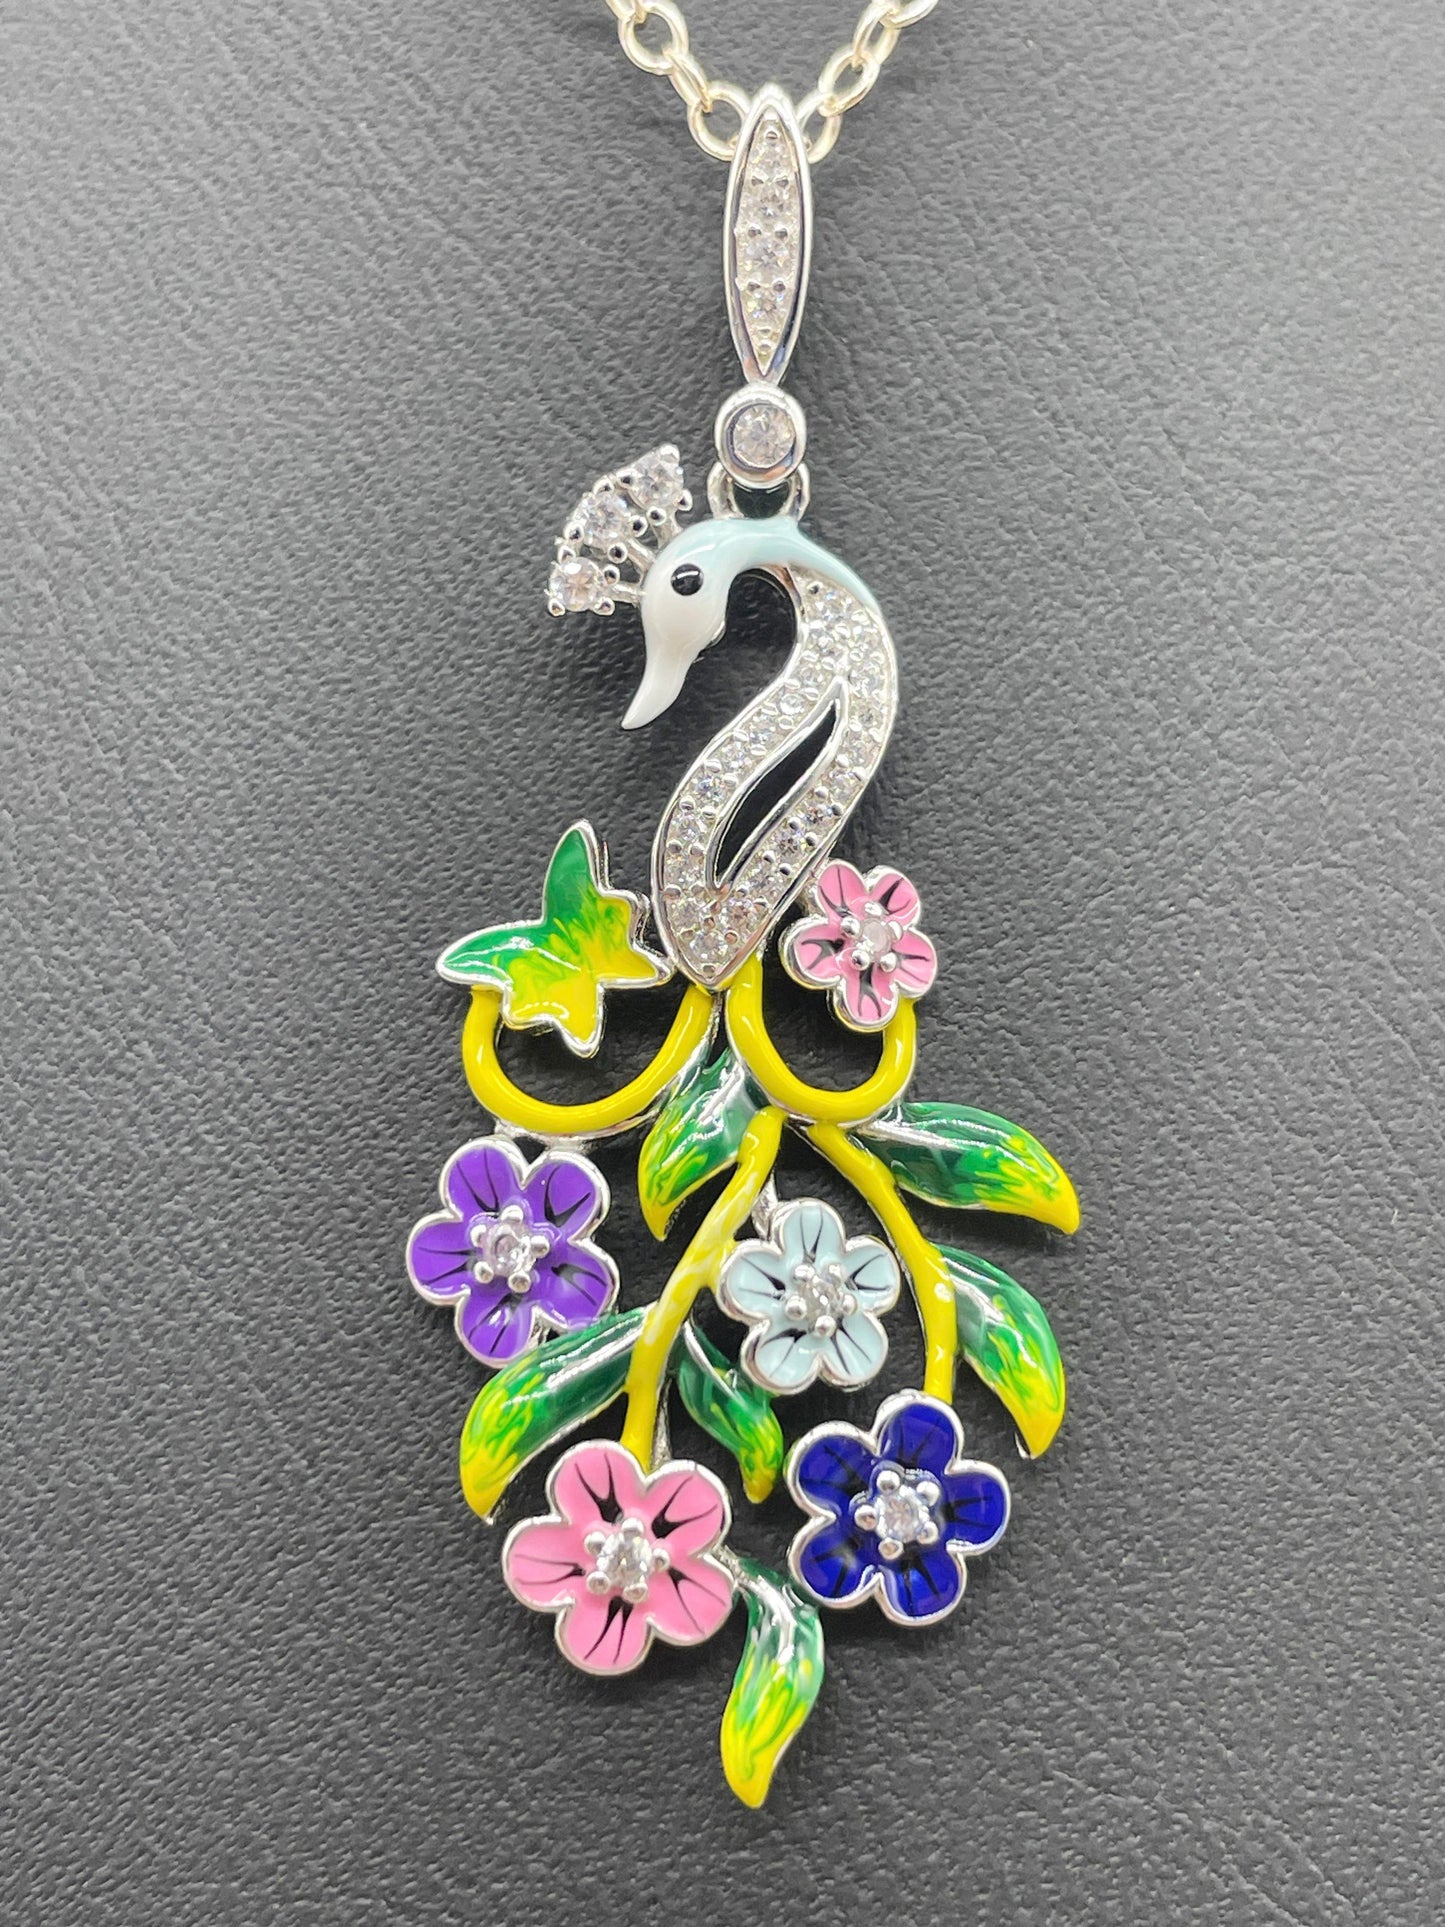 Hand-Painted Enamel Swan/Flowers CZ Sterling Silver Pendant